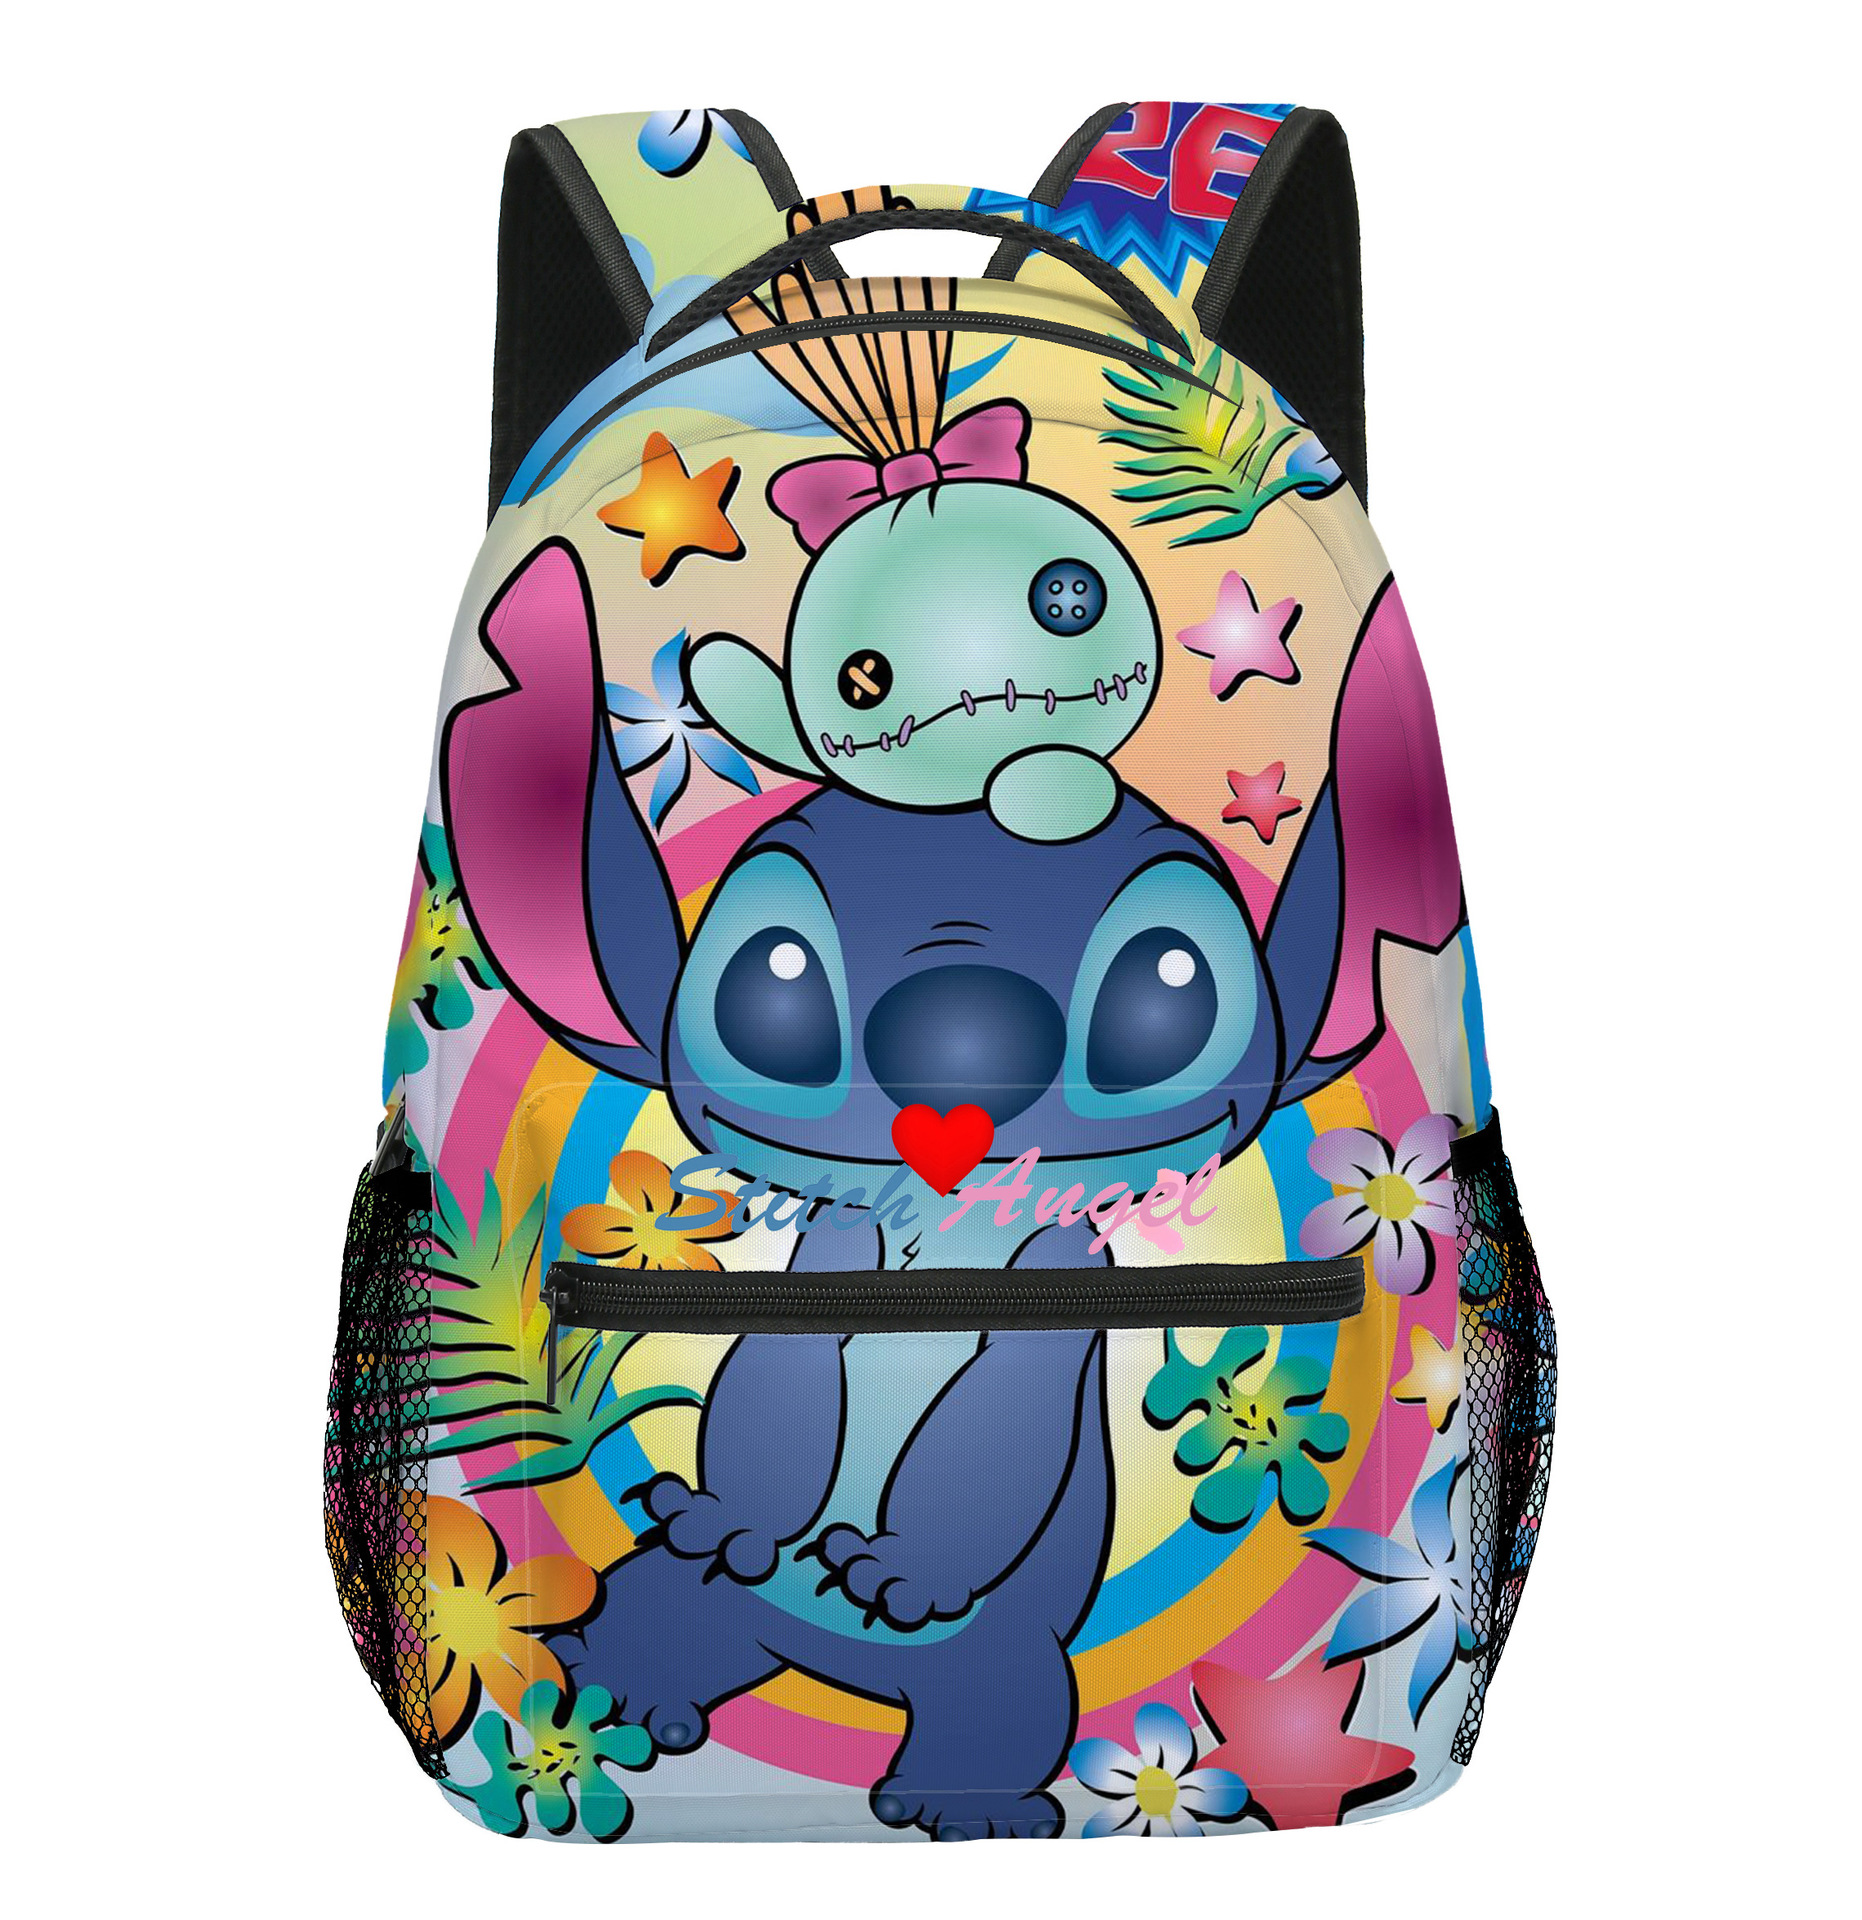 Stitch anime Backpack